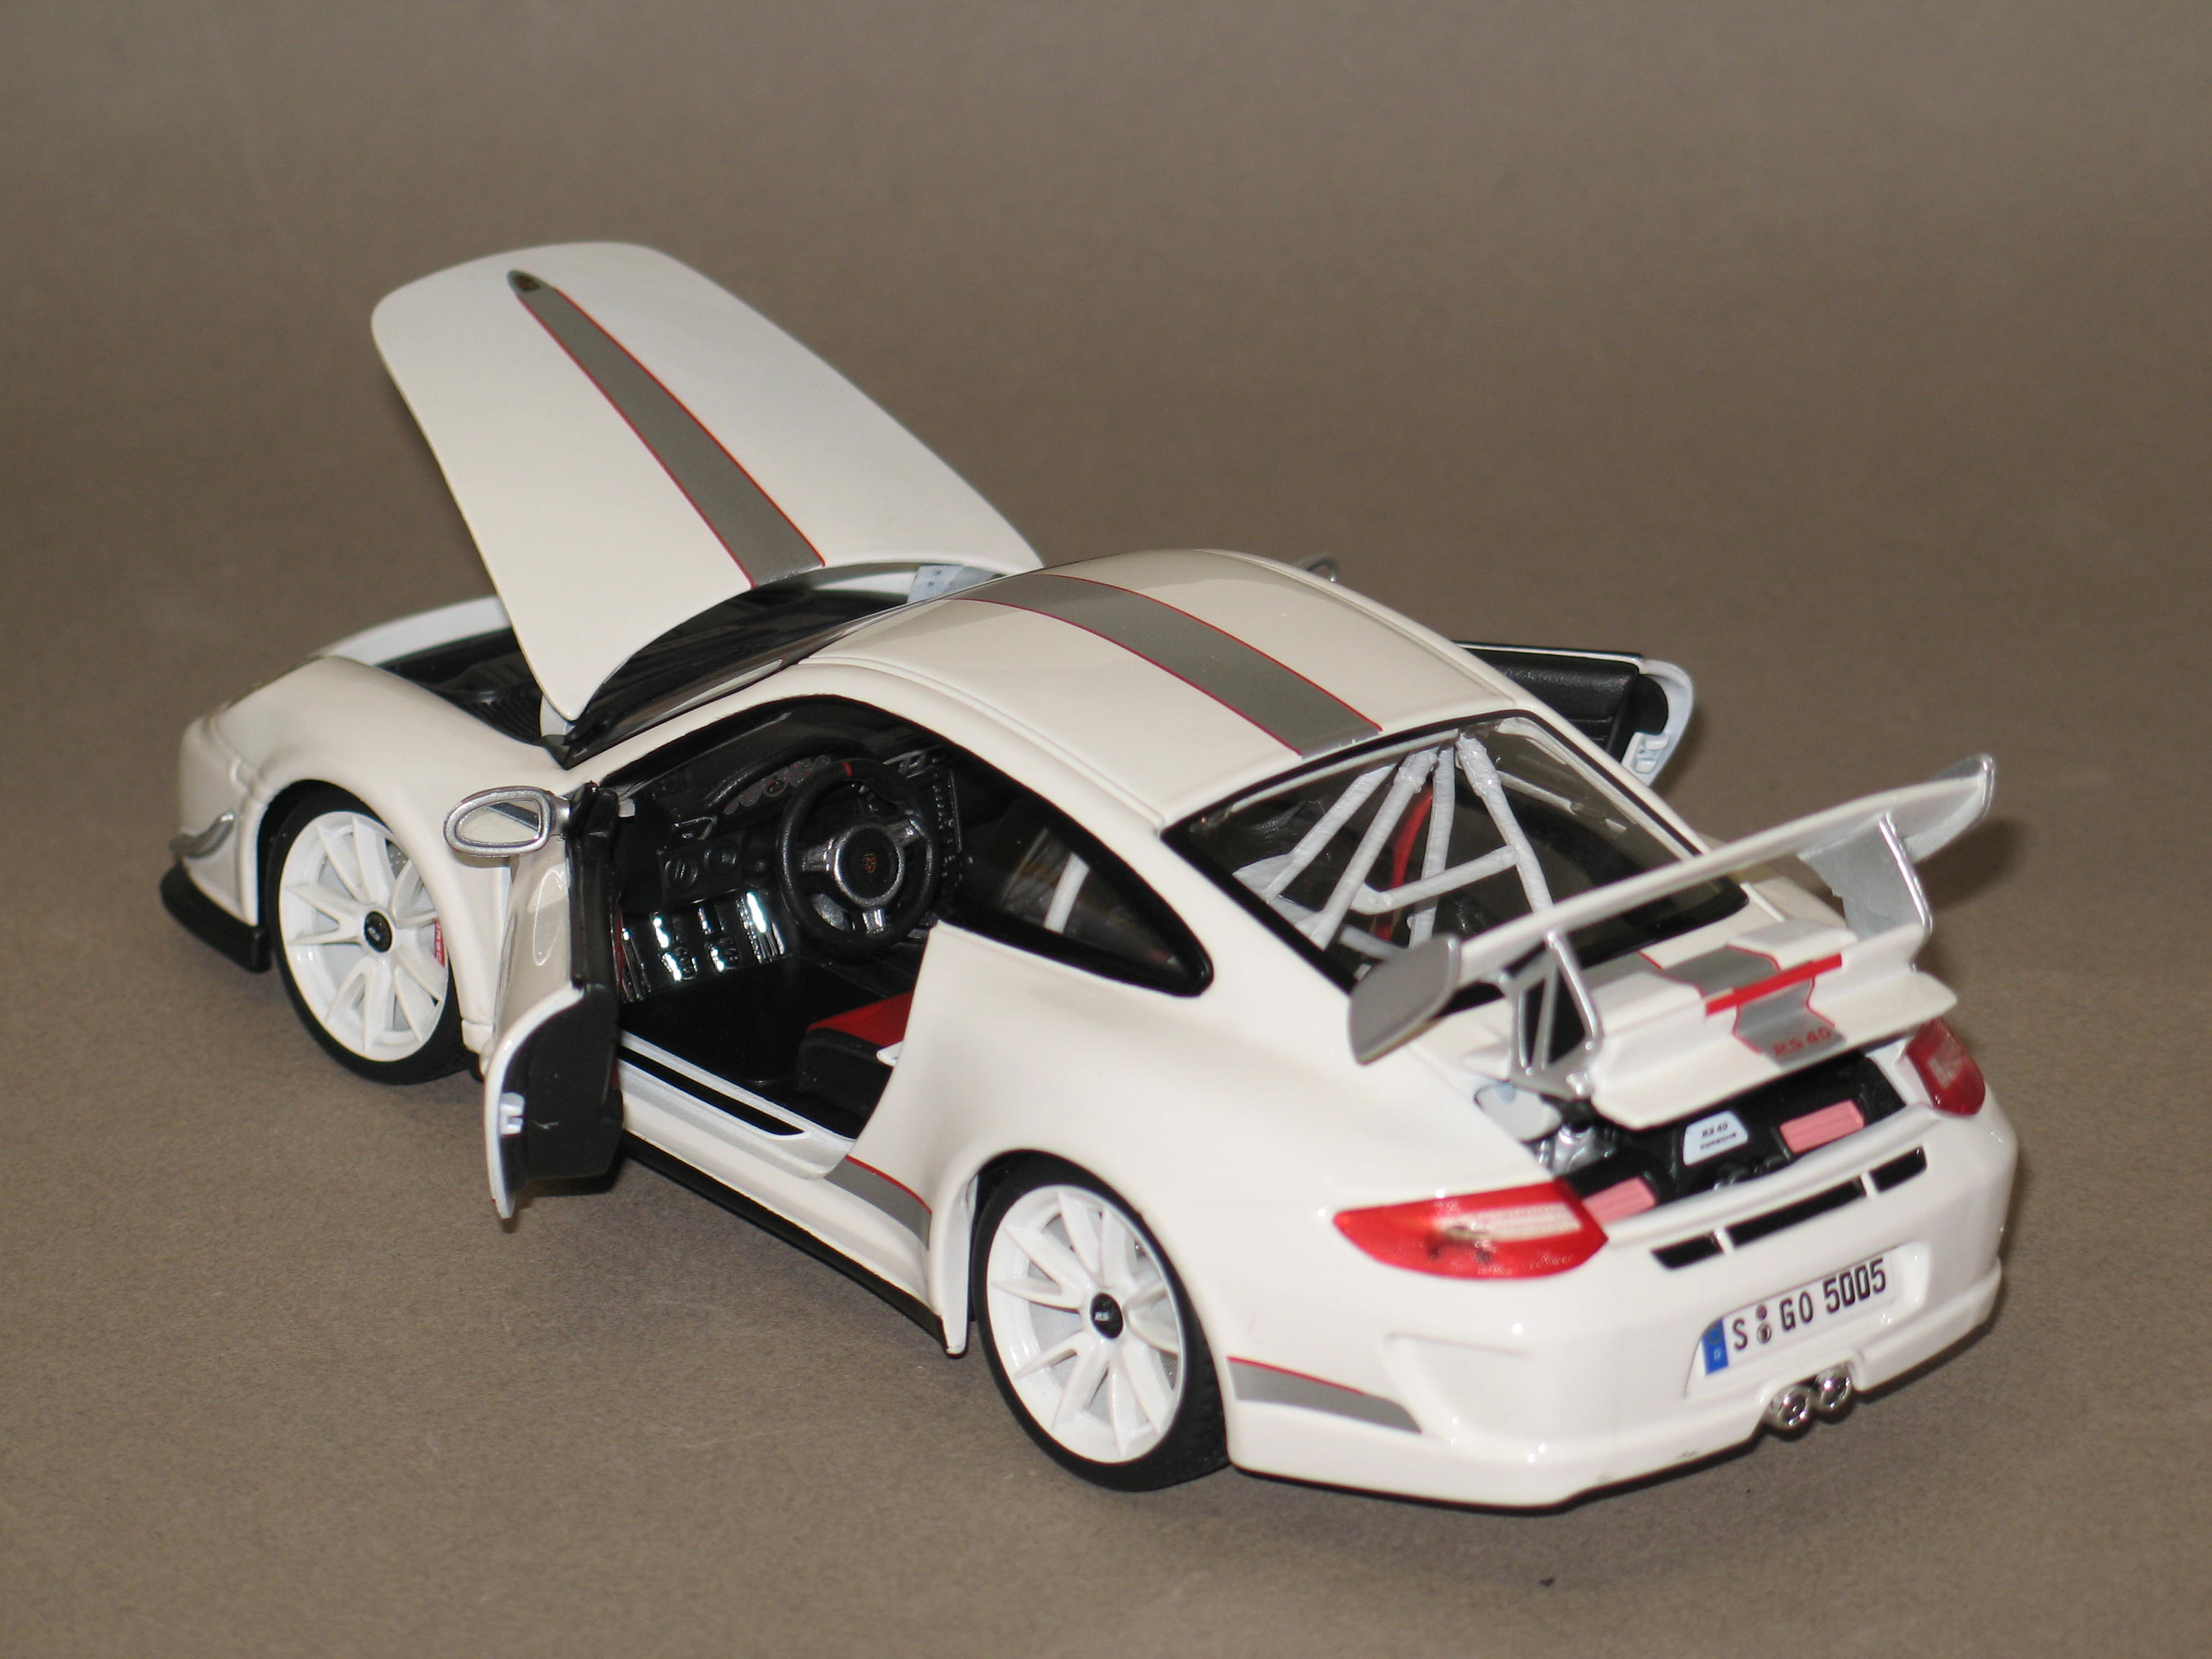 Porsche 911-997 Gt3 RS 4.0l blanche miniature bburago 1/18